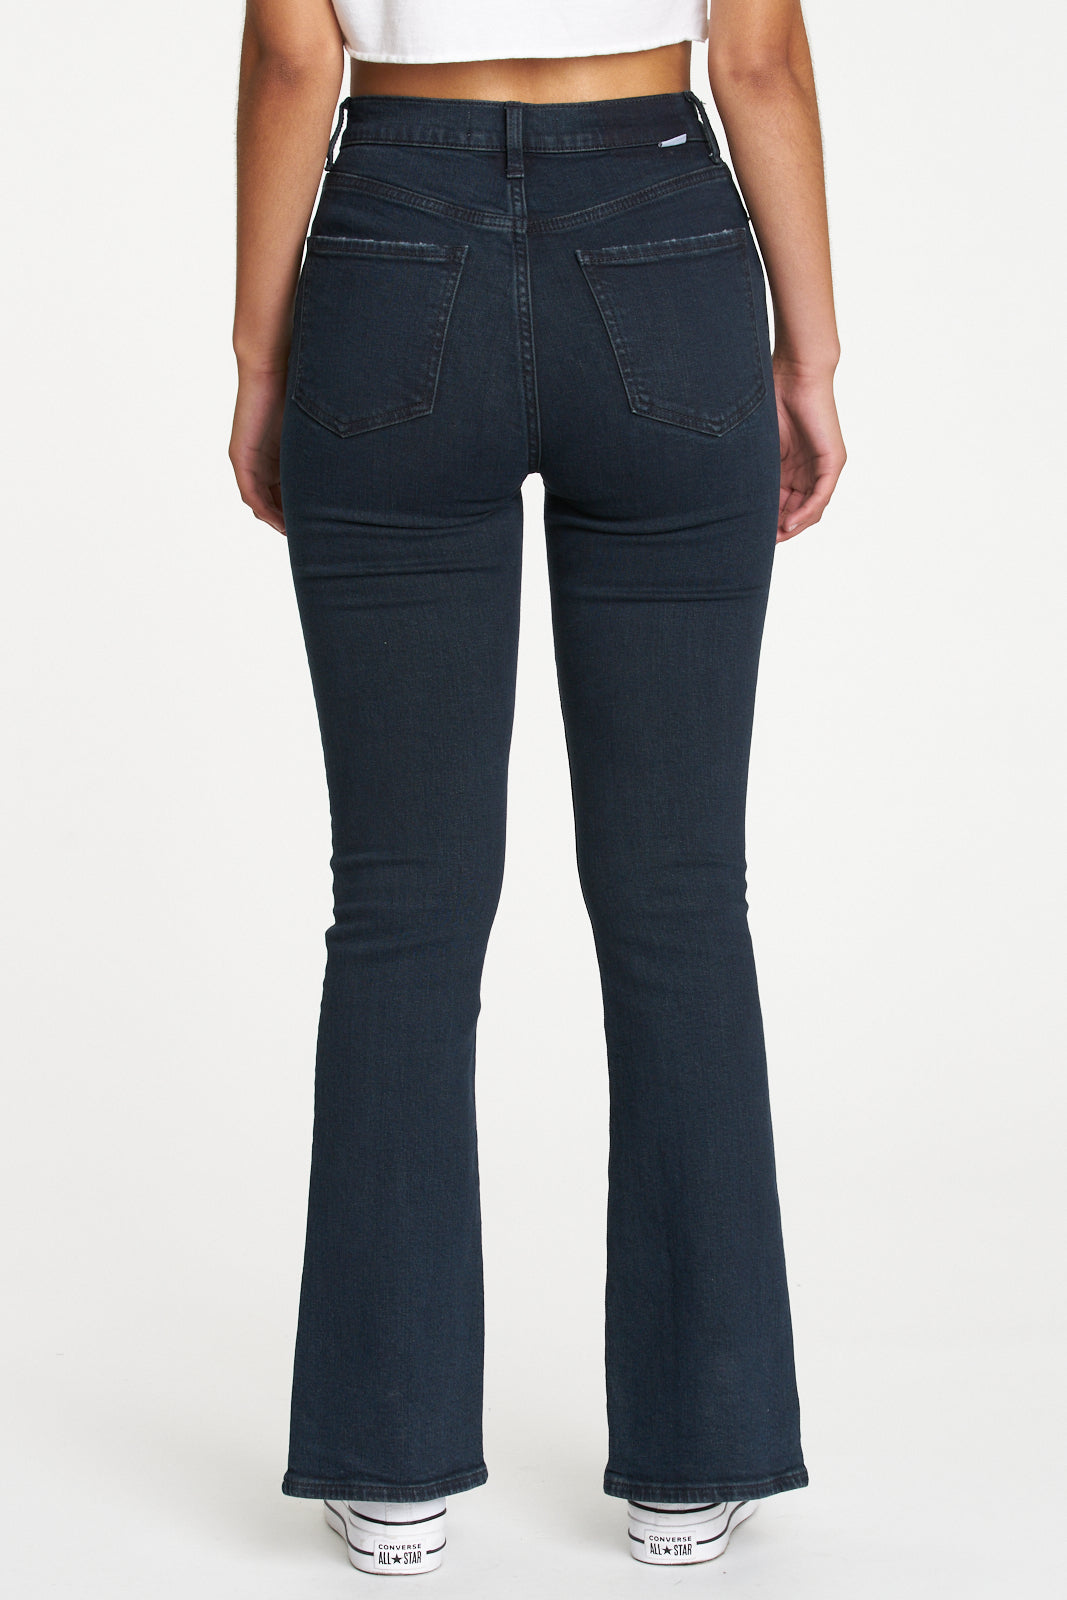 Topshop low-rise bootcut Jamie jeans in black